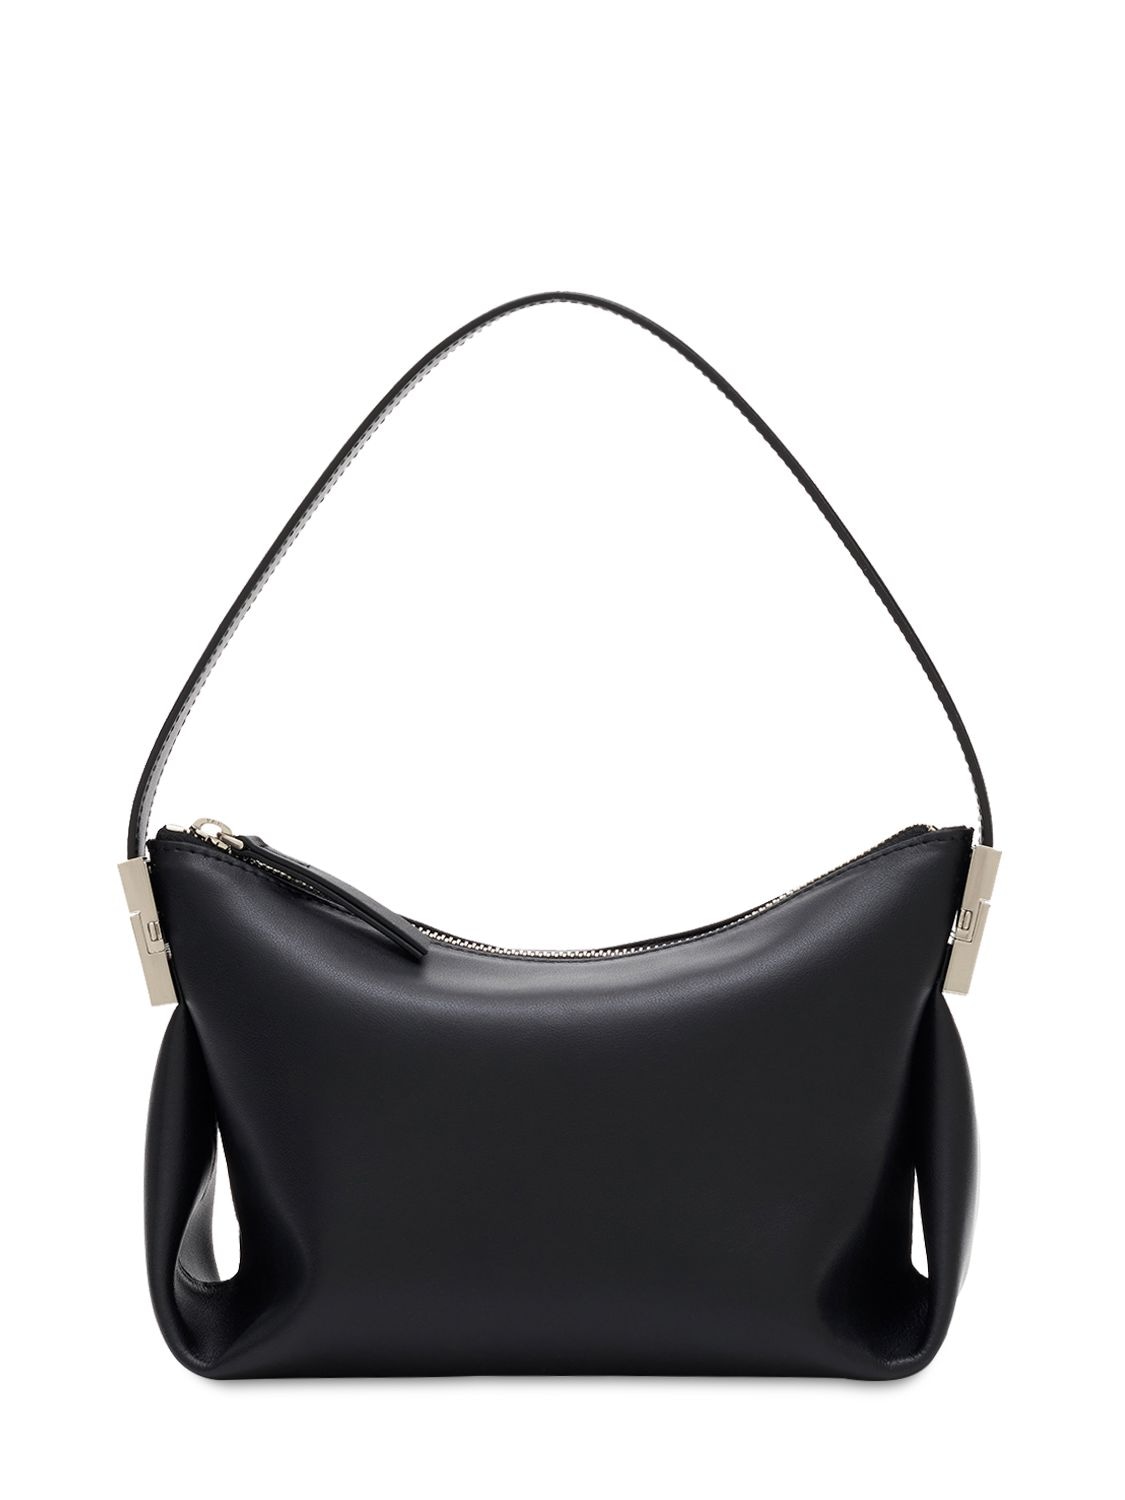 OSOI Bean Leather Shoulder Bag